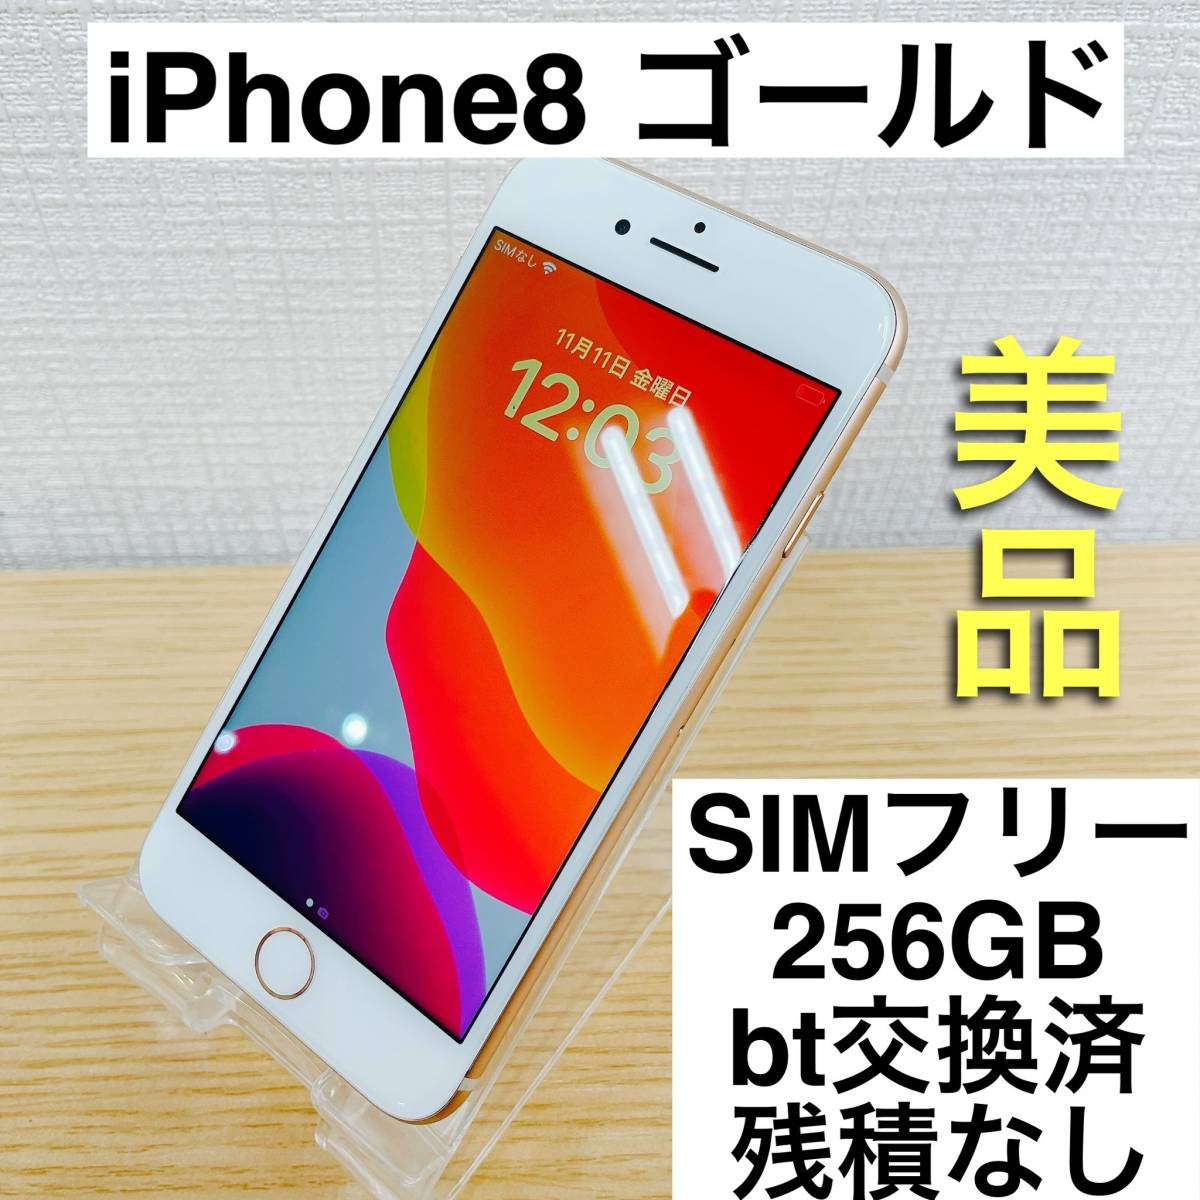 iPhone8 256GB SIMフリー | myglobaltax.com